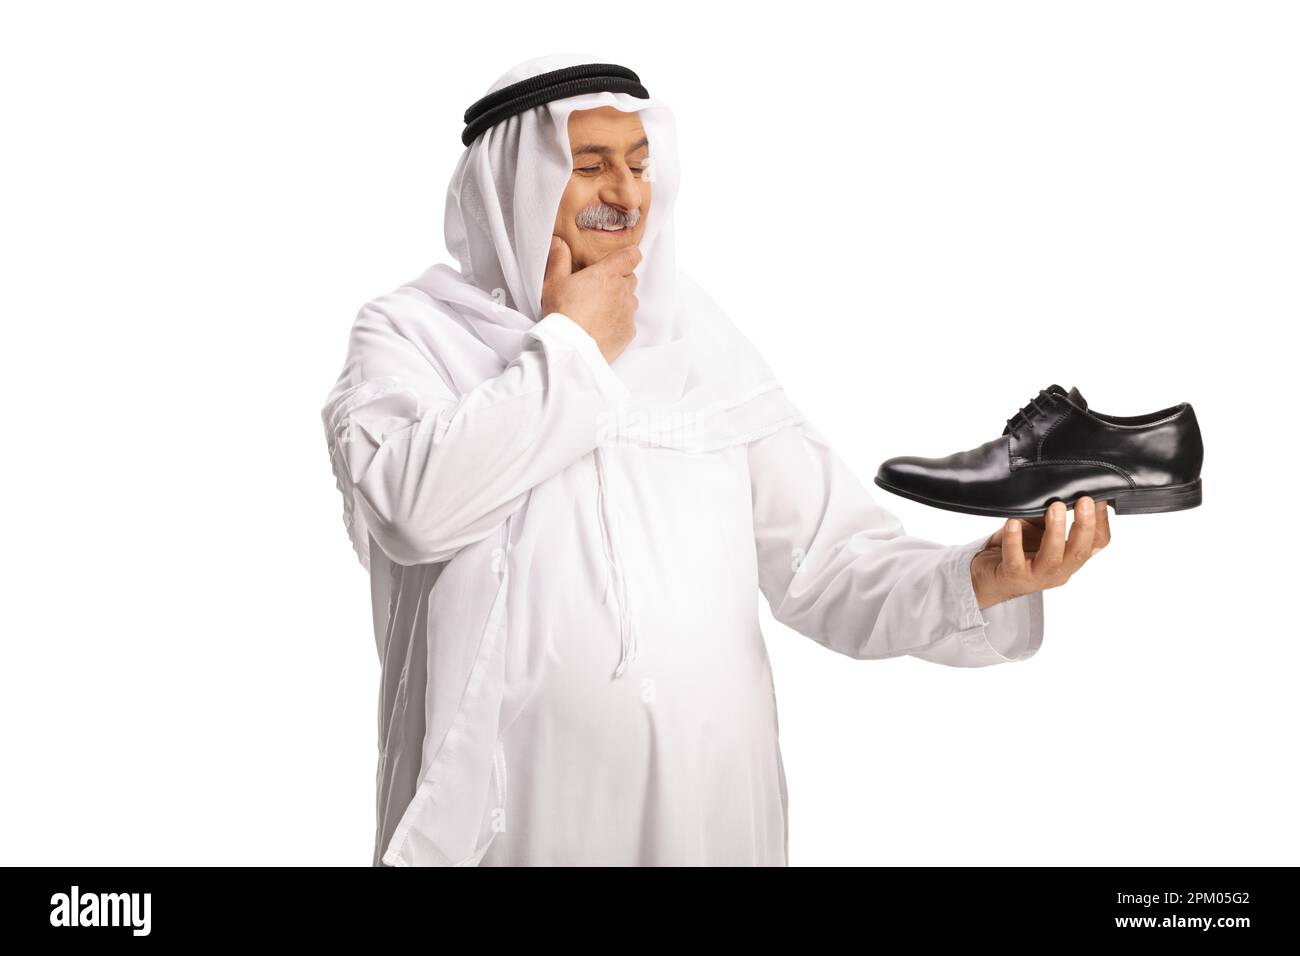 Arab man holding a black leather shoe and thinking isolated on white background Stock Photo